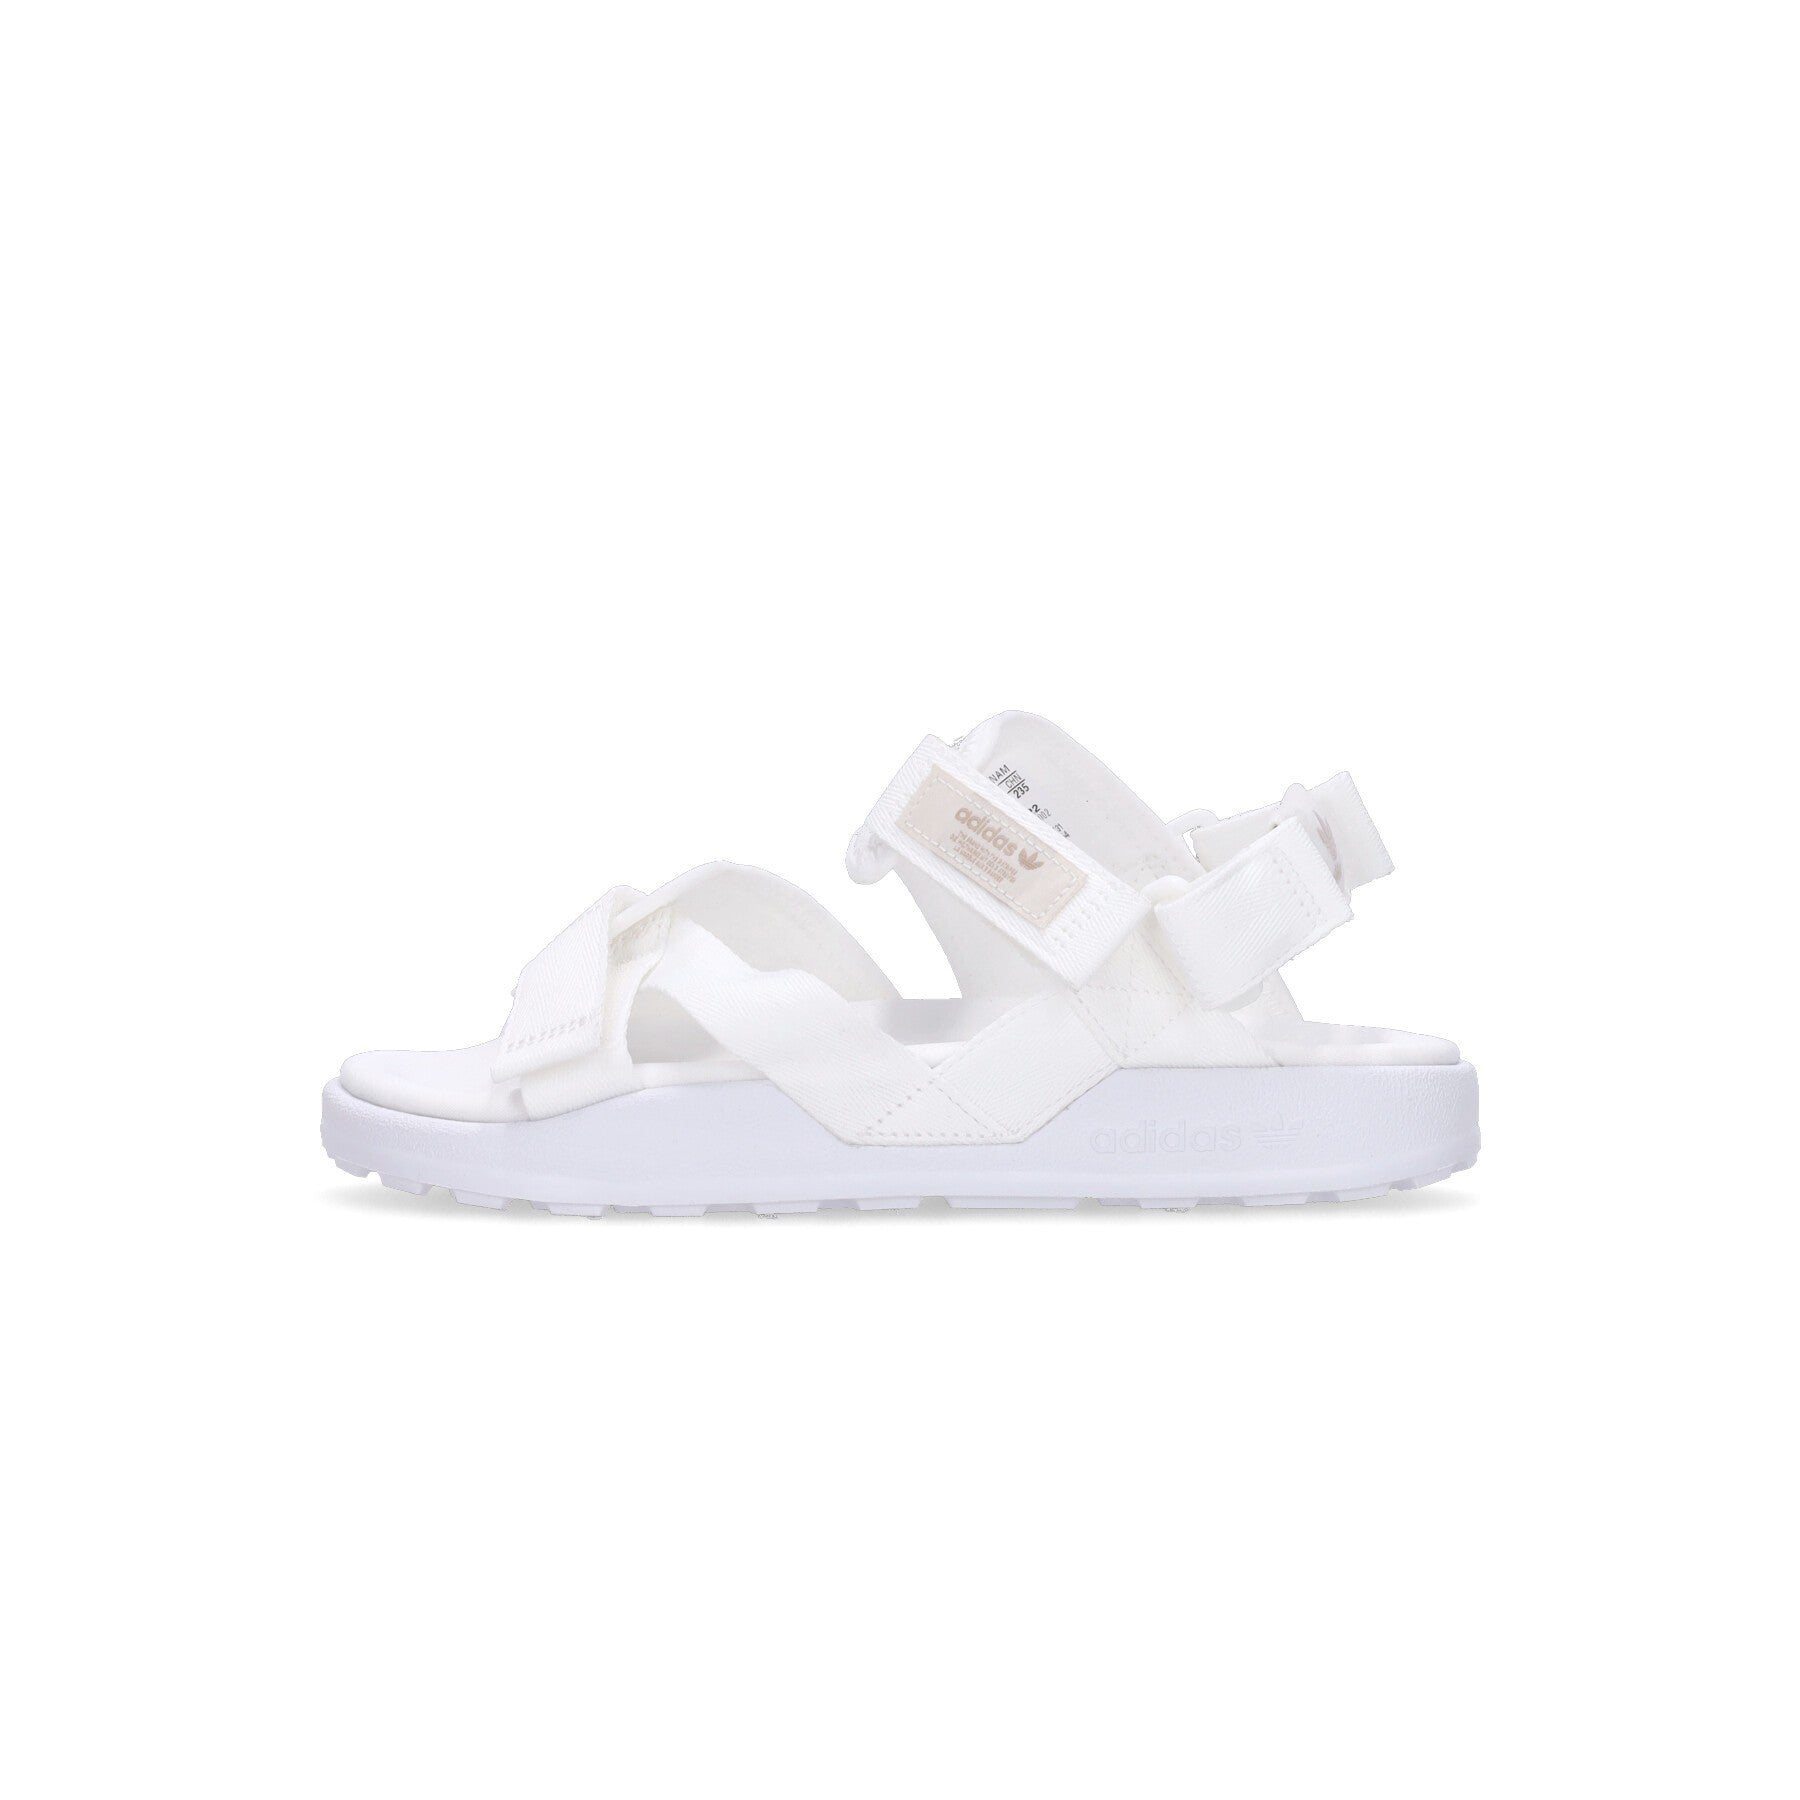 Adidas, Sandalo Donna Adilette Adv W, Cloud White/core White/wonder Taupe